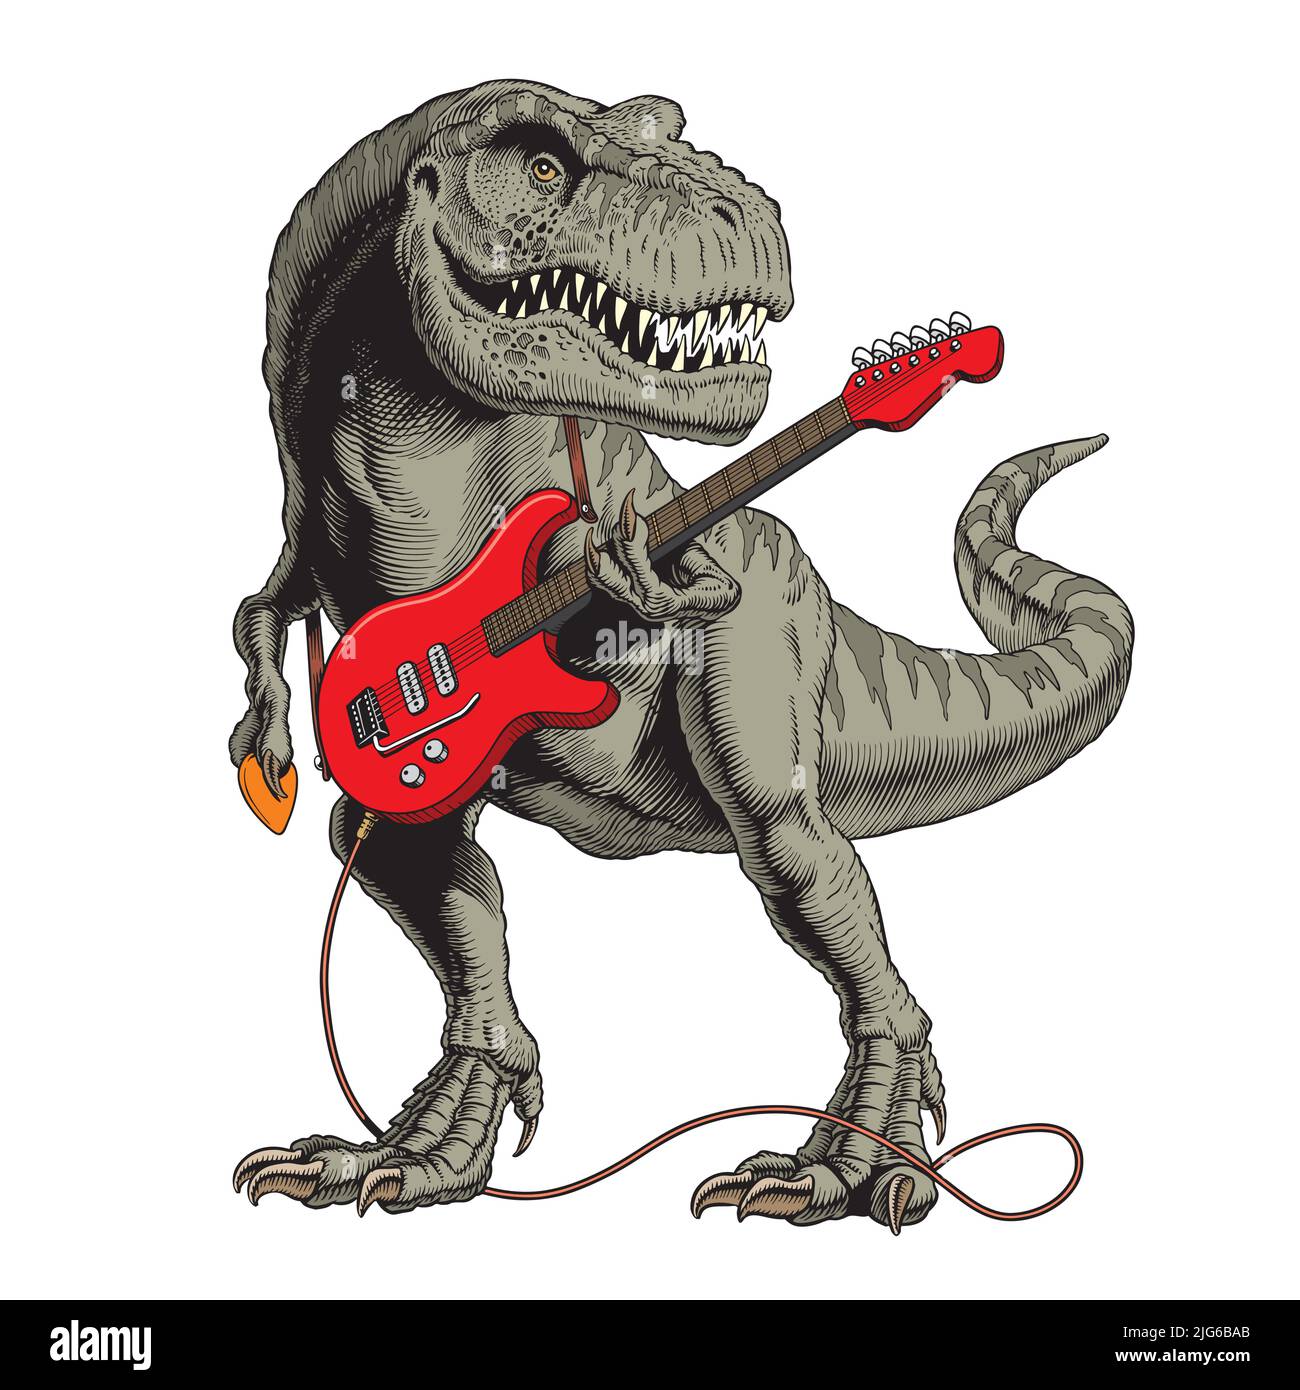 Dinosaur playing electric guitar. Tyrannosaurus or T. rex poster orr t-shirt design. Comic style vector illustration. Stock Vector